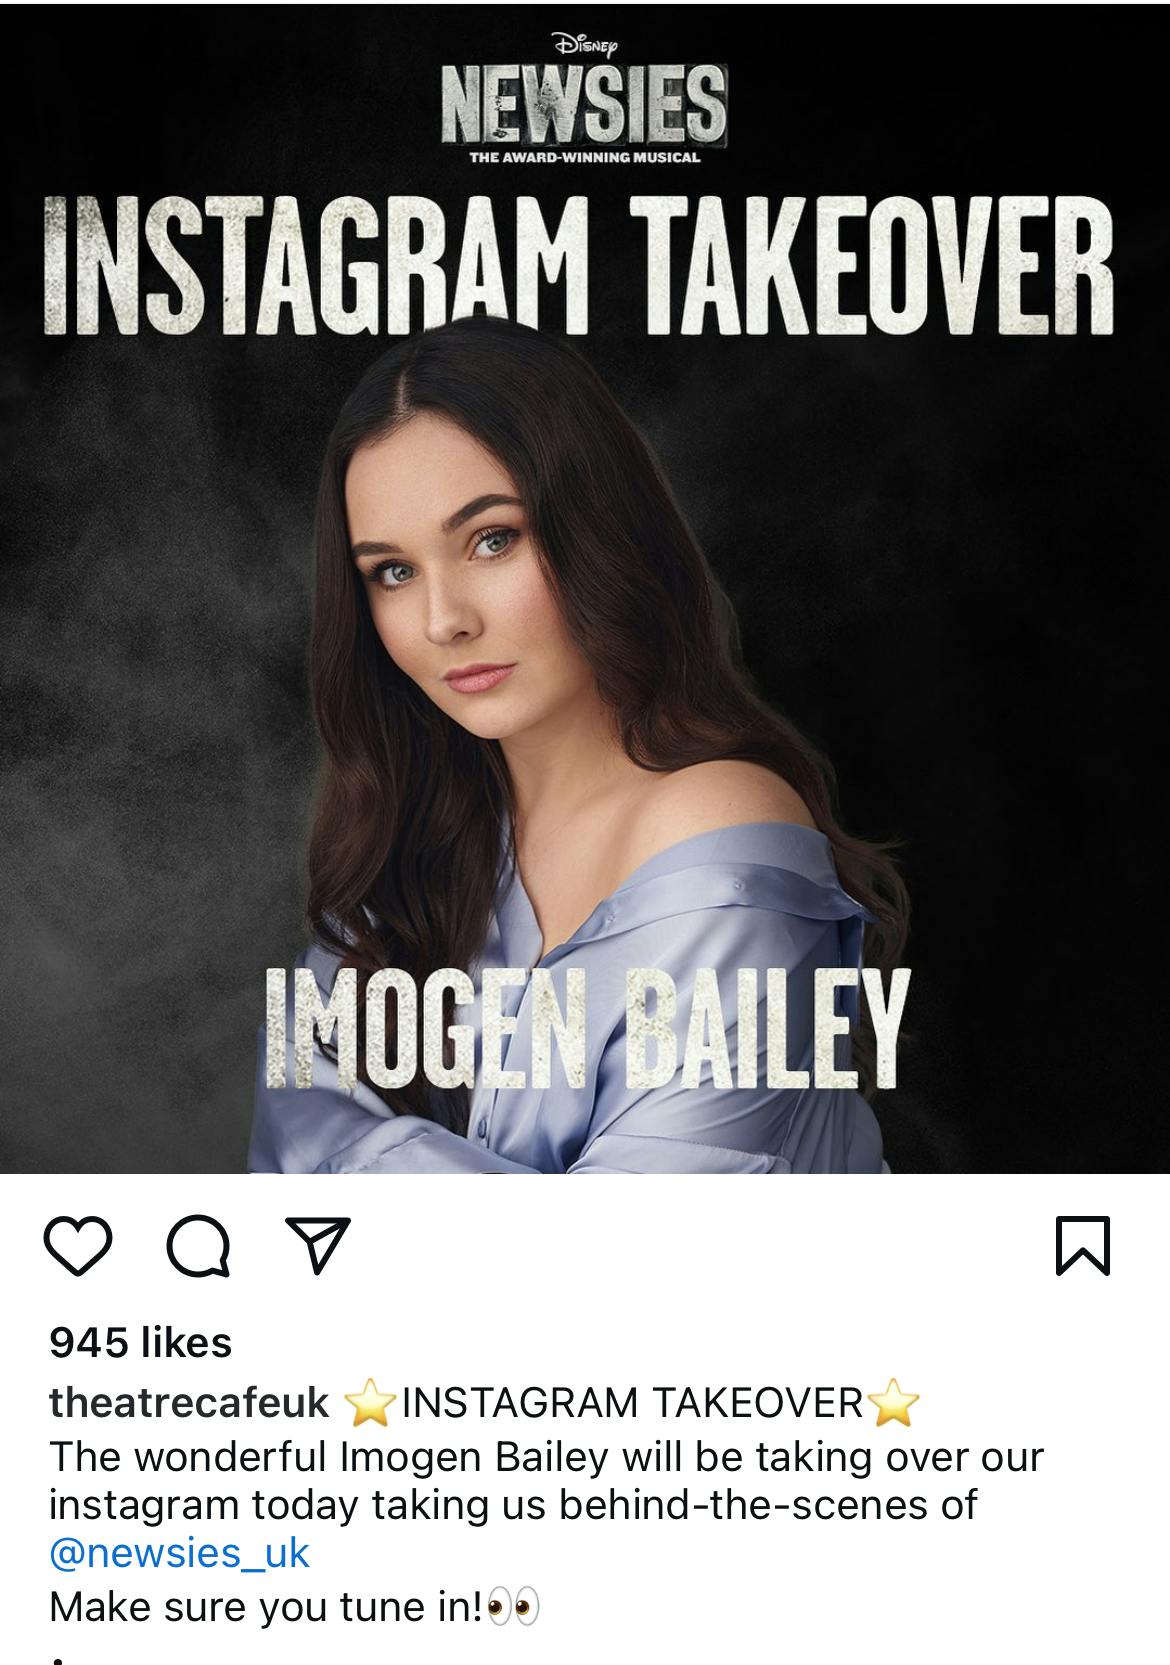 Instagram takeover poster